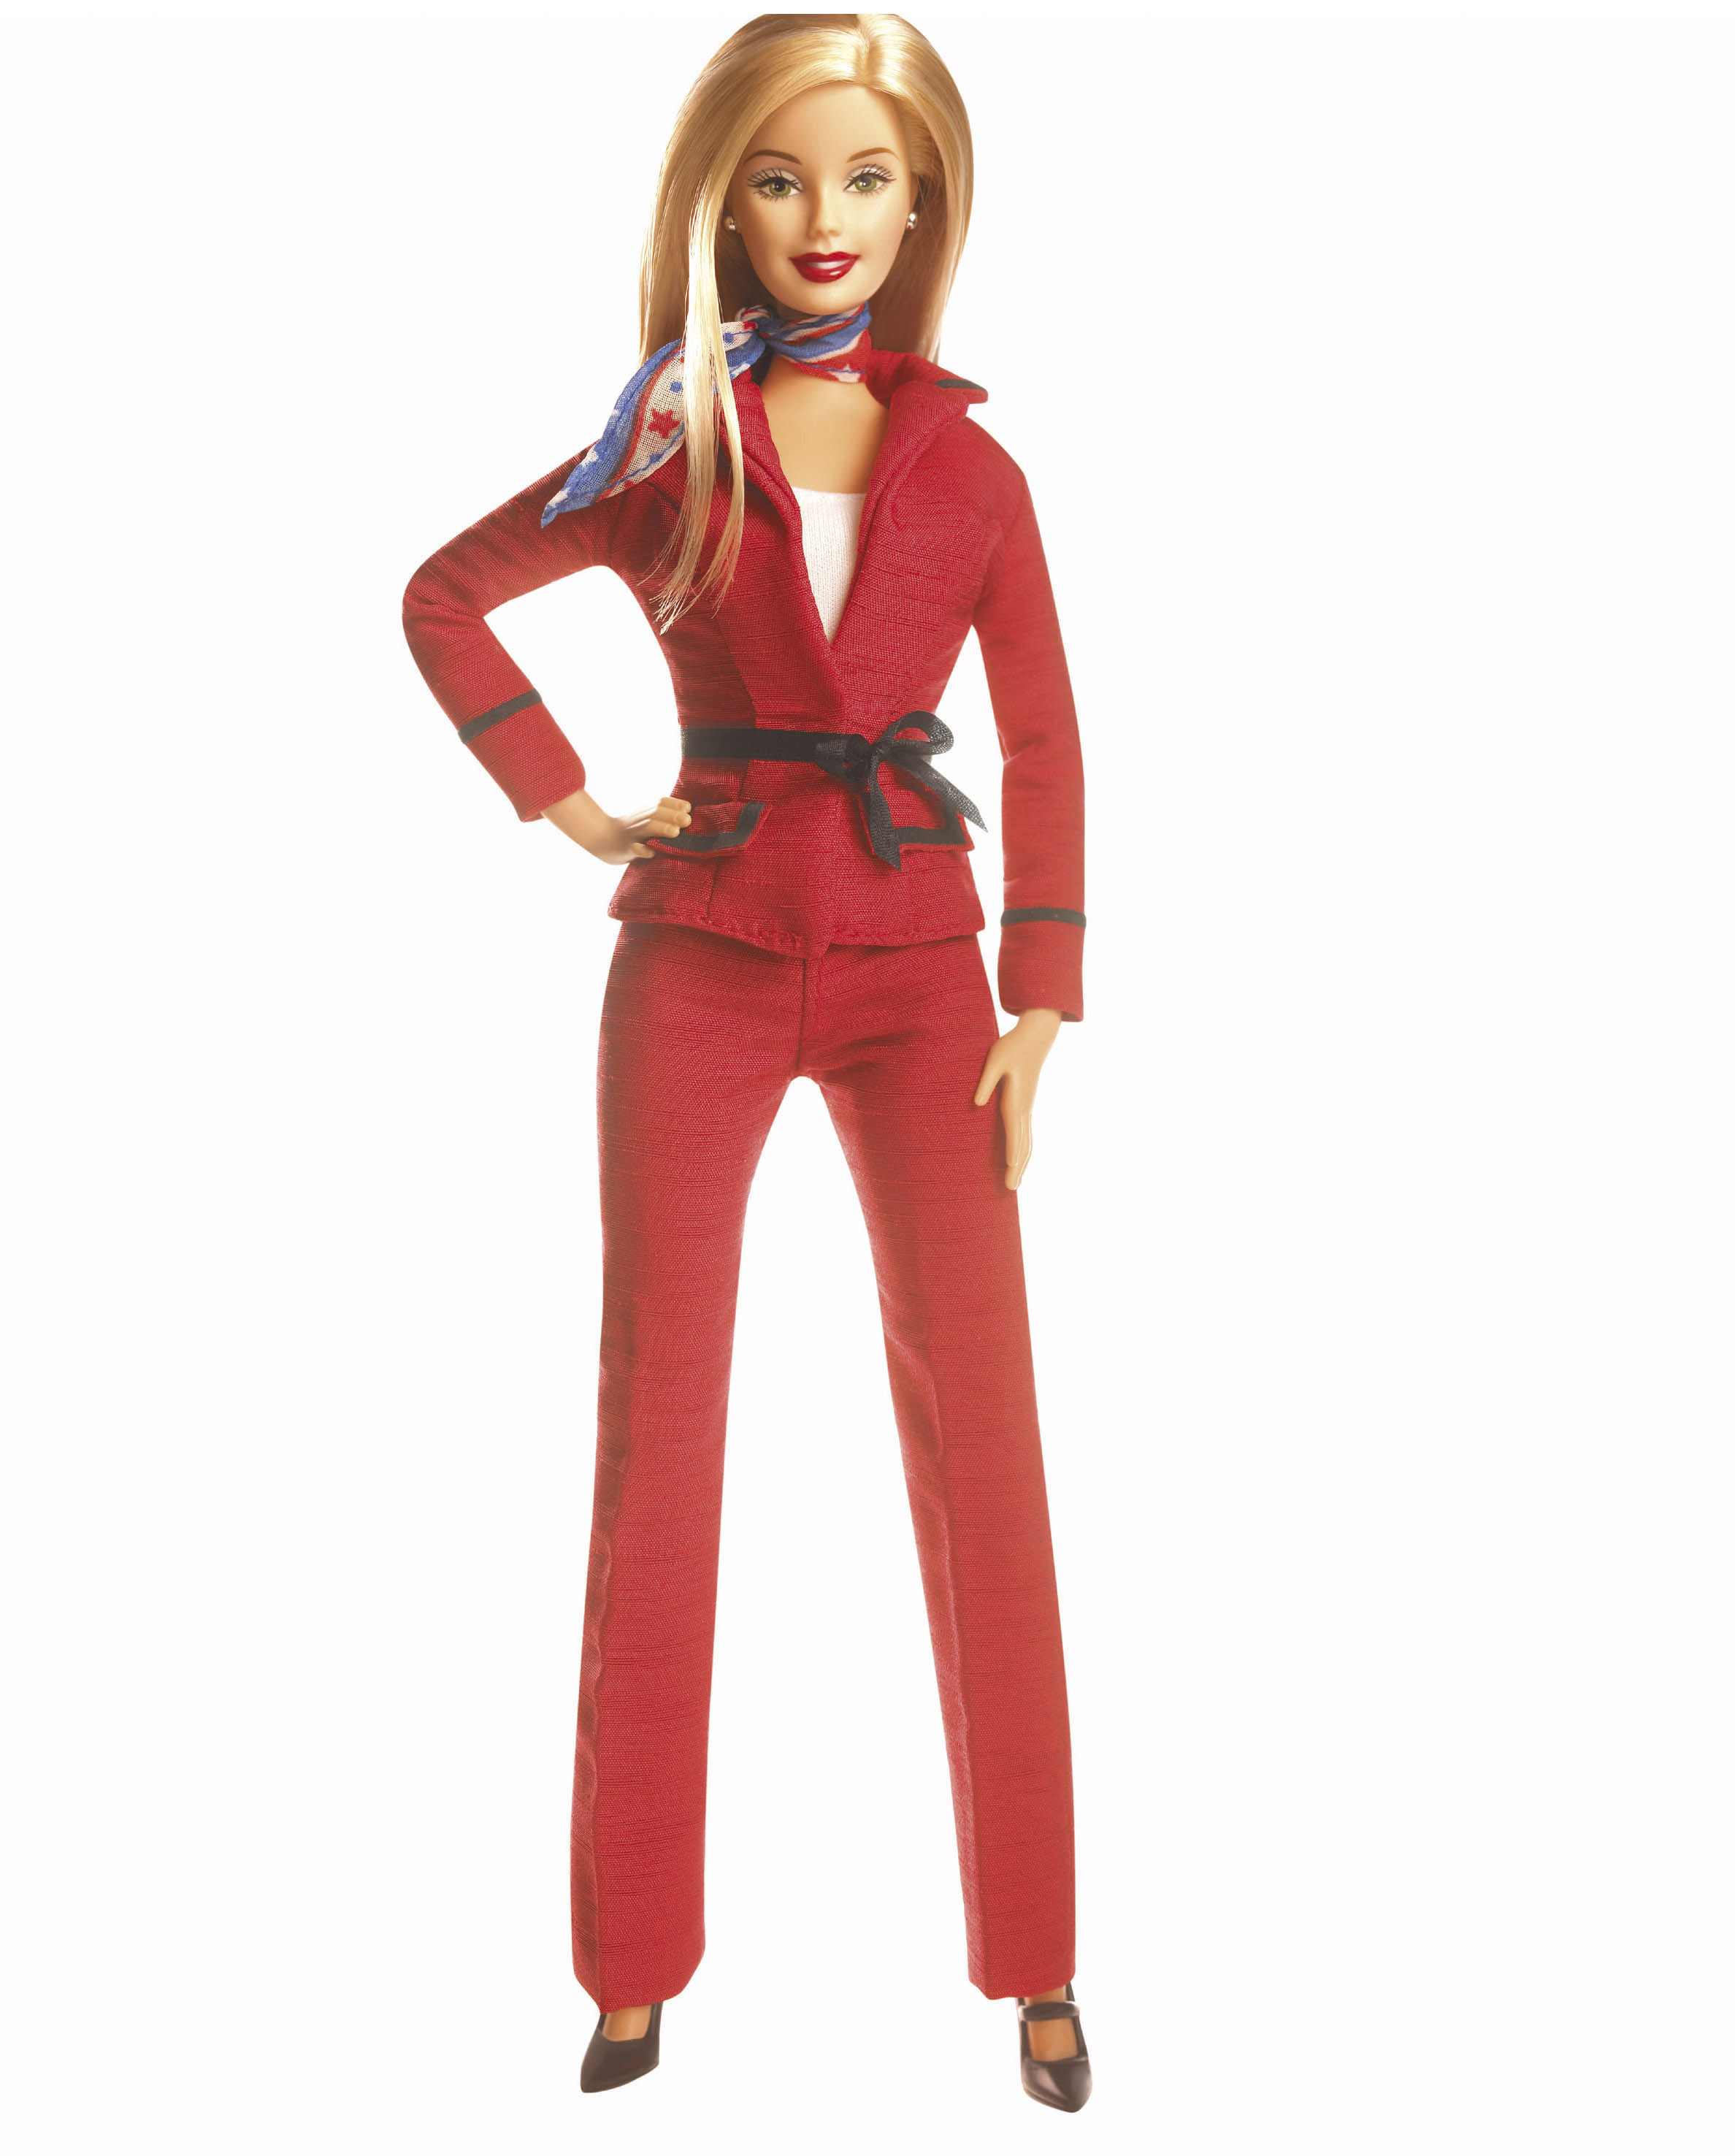 Barbie Announces a Surprise Bid for the 2004 Presidency